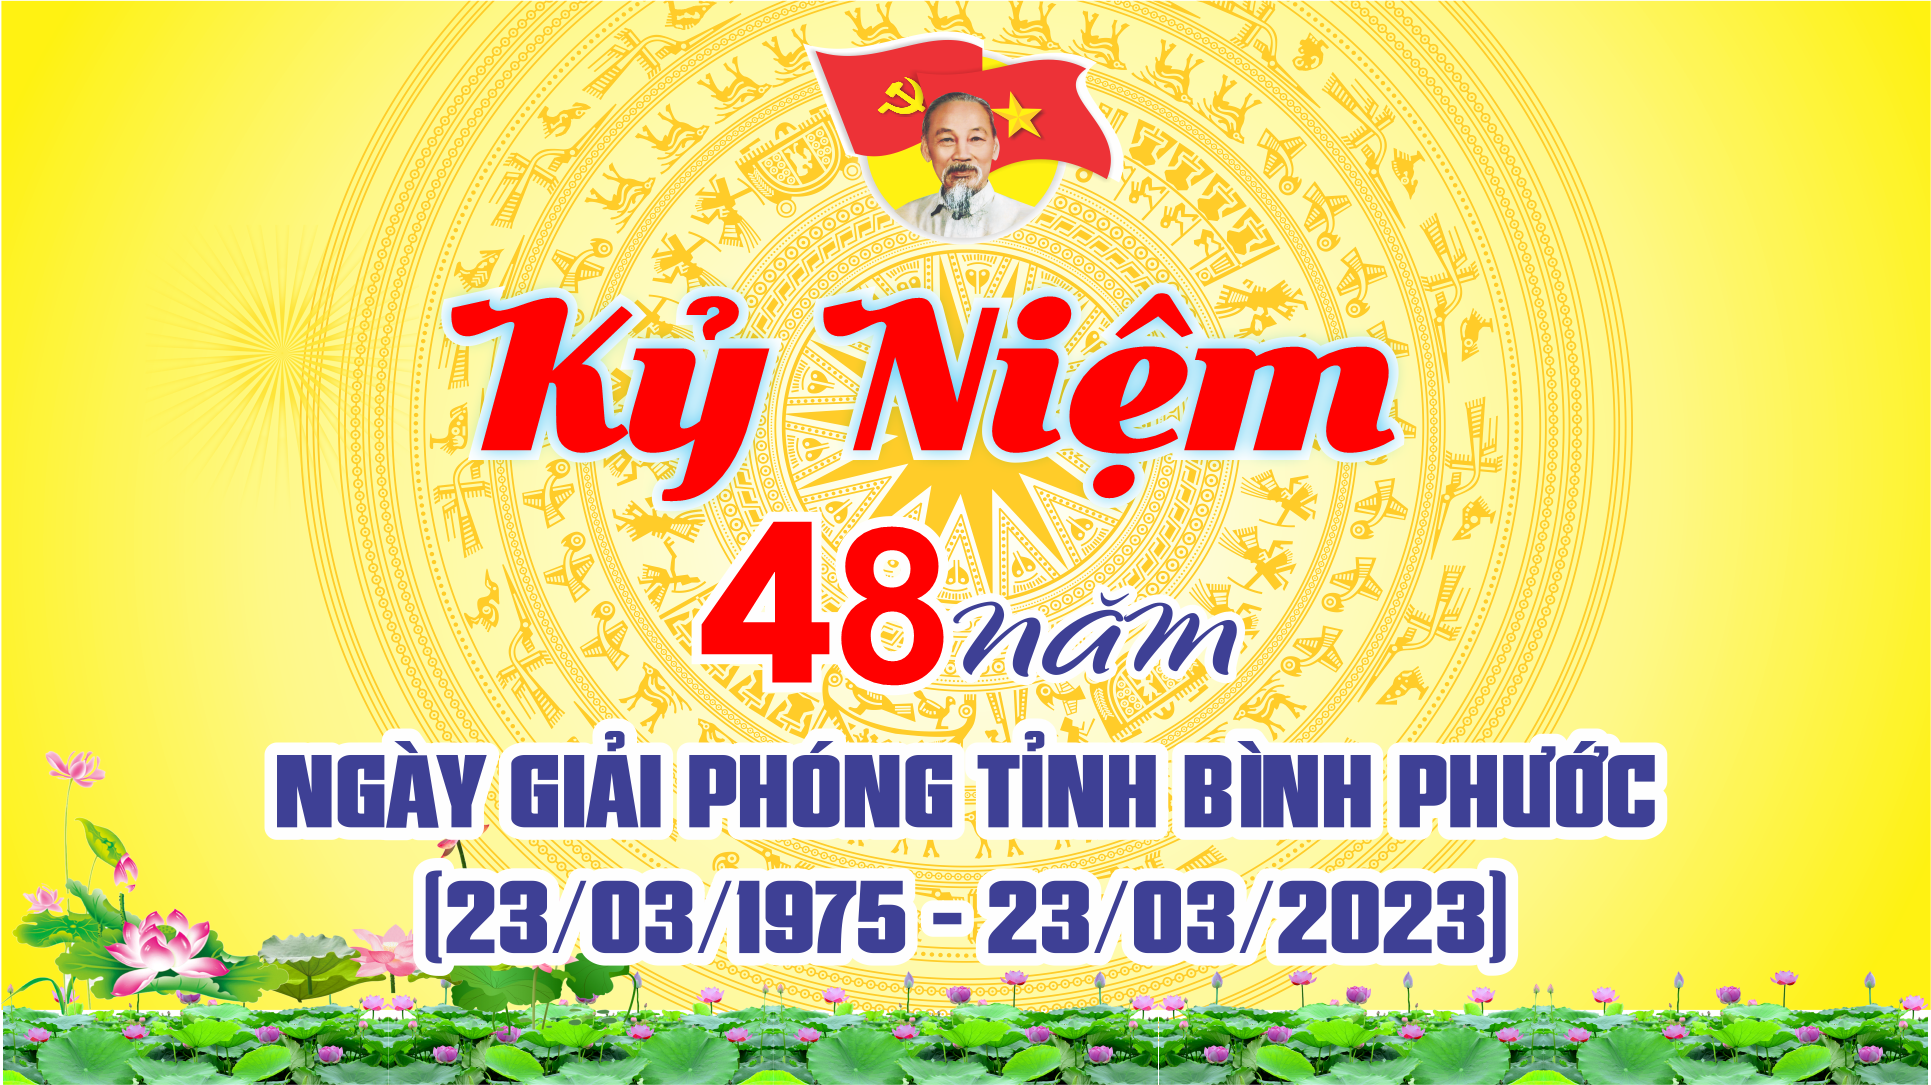 2 48 nam ngay GP Binh Phuoc